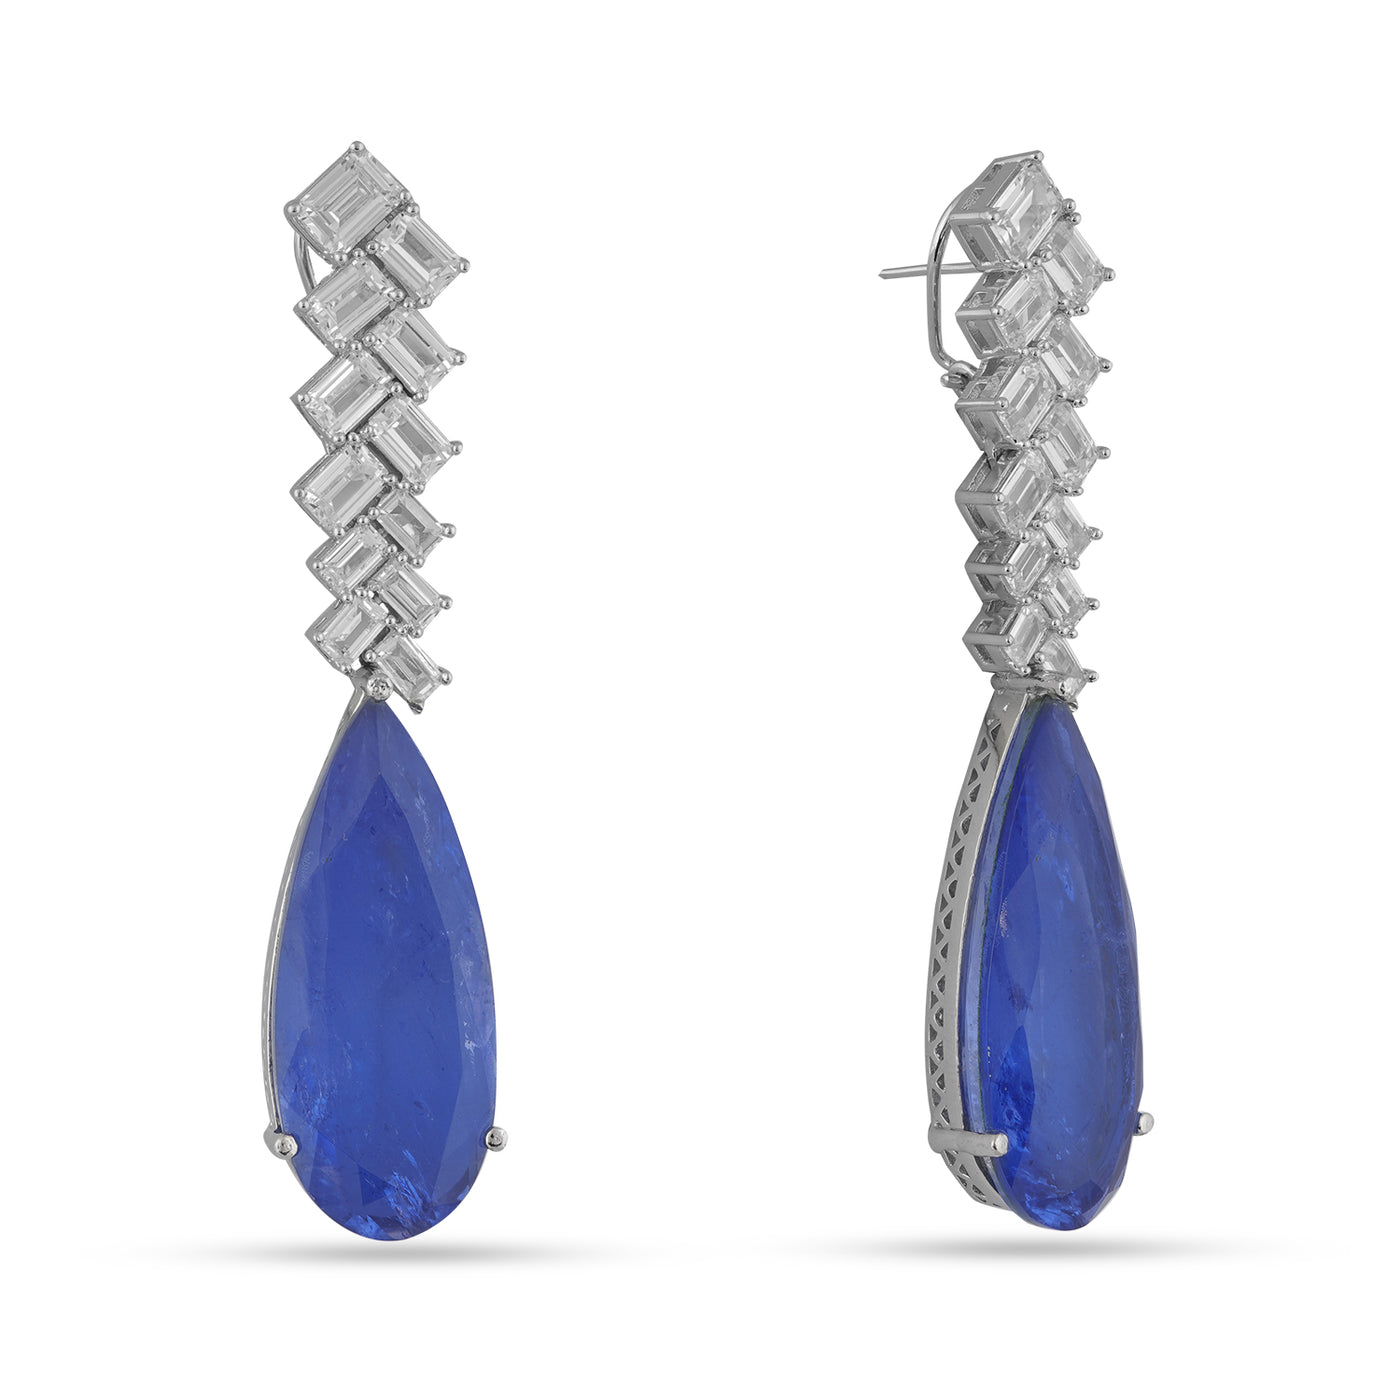 CZ and Blue Doublet Drop Earrings